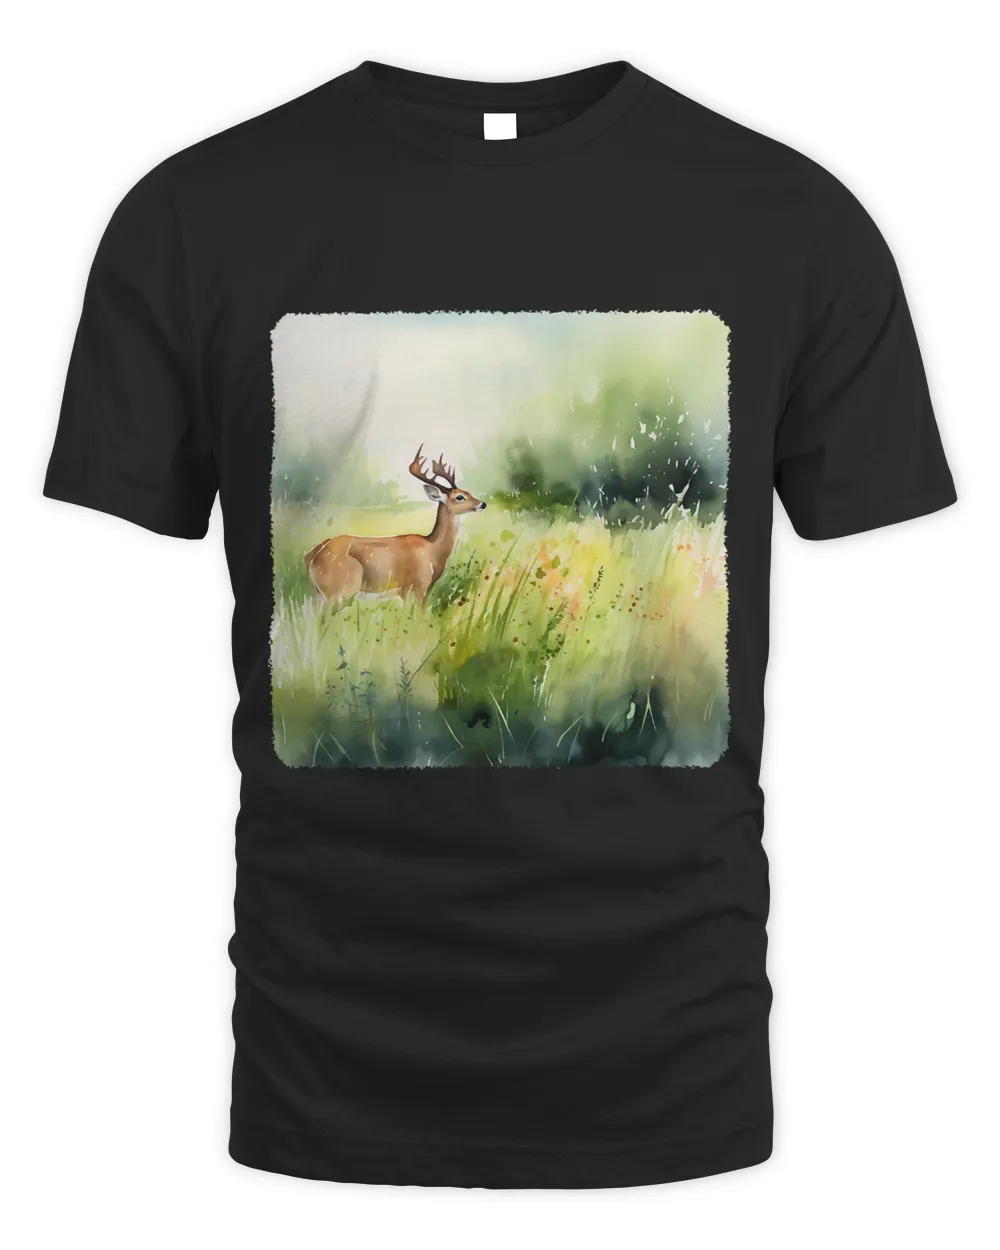 Deers A Deer Grazing In A Meadow. Peaceful Deer Outdoor Wildlife